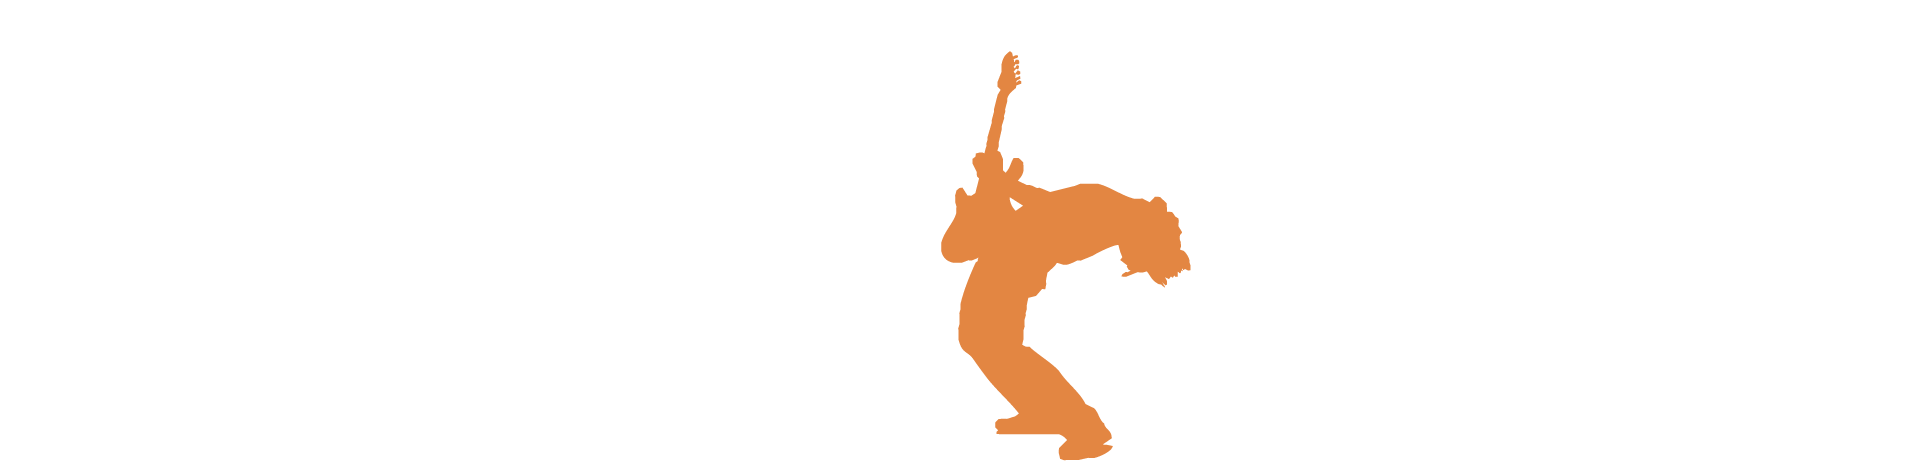 Emwbf-Logo-Inverted-Rgb-1920px-w-300ppi